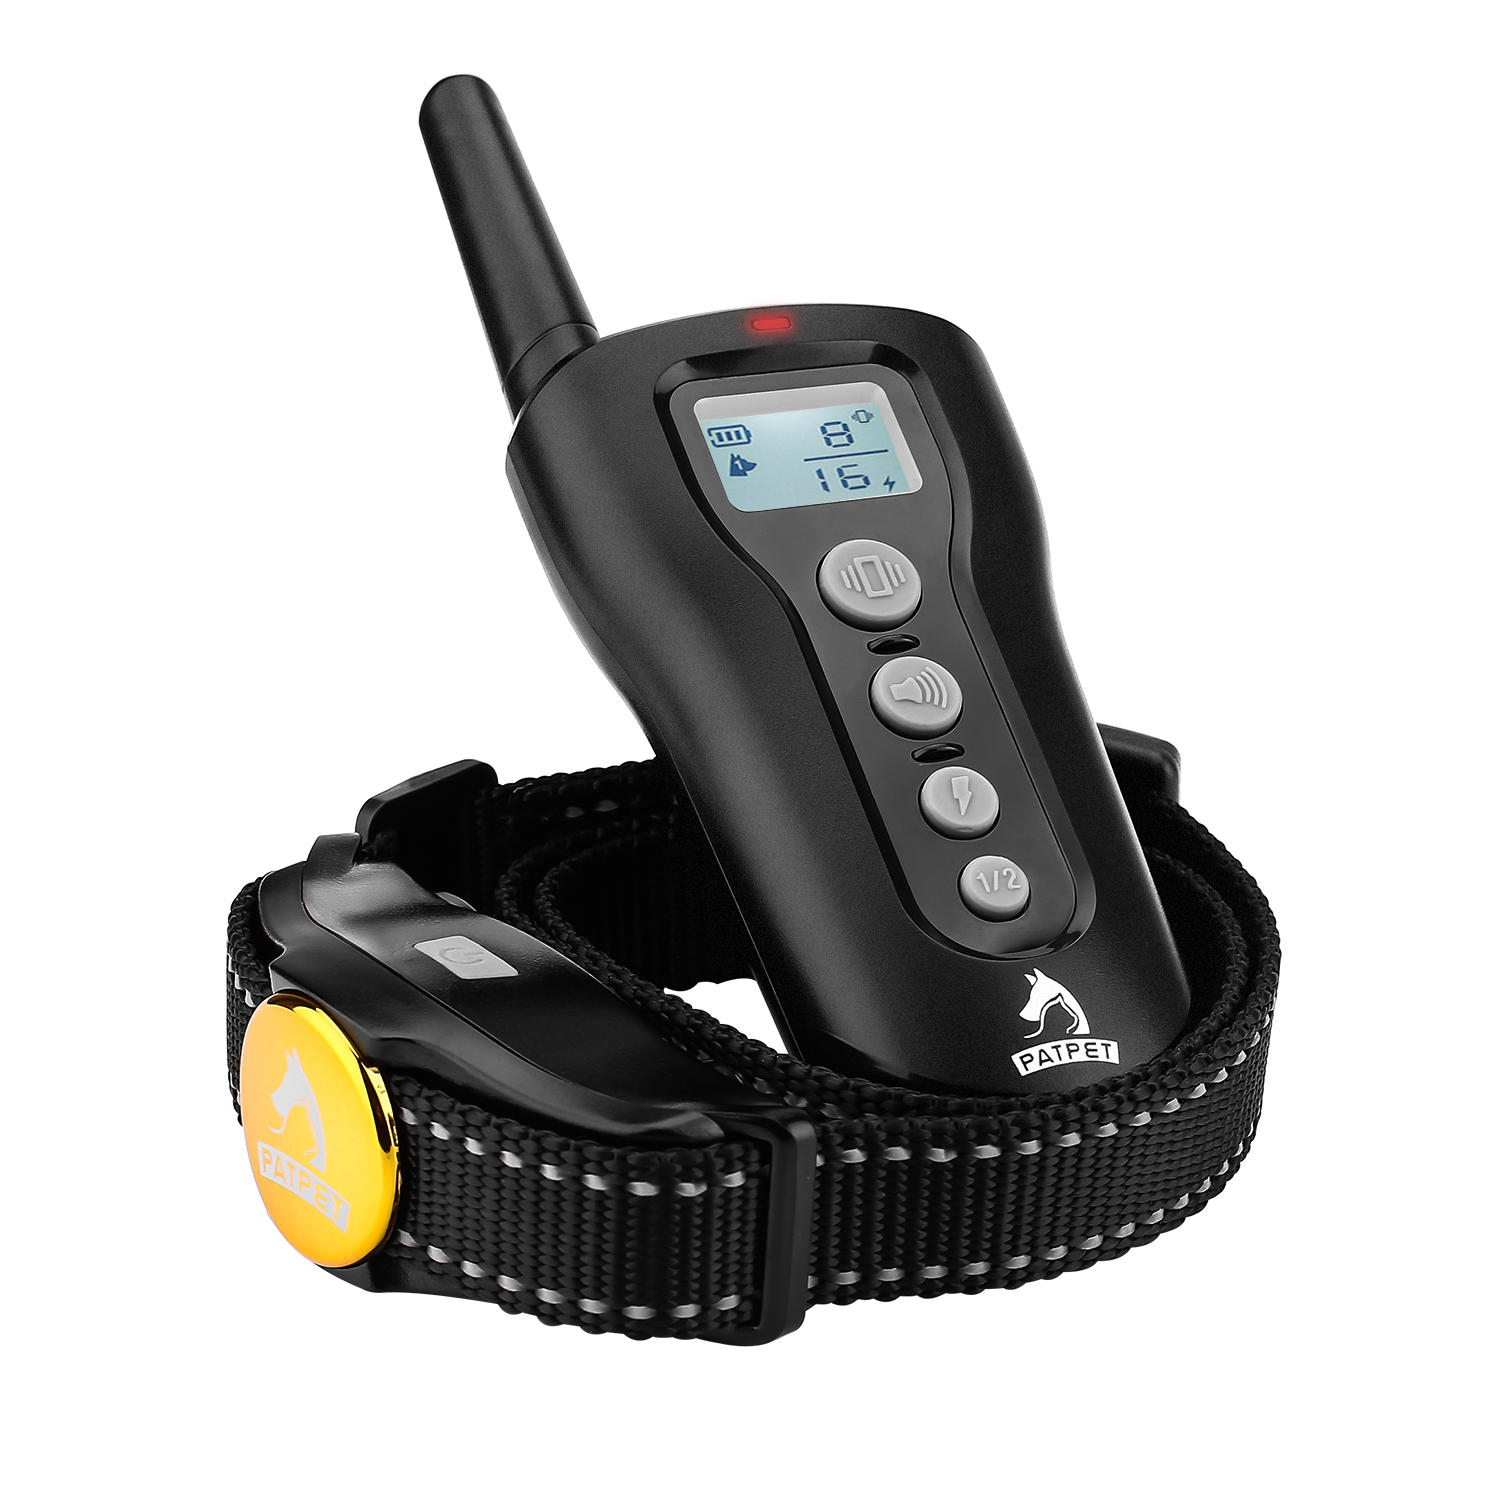 patpet p-collar 320 eu plug dog training collar innovative blind operation shock collar pet